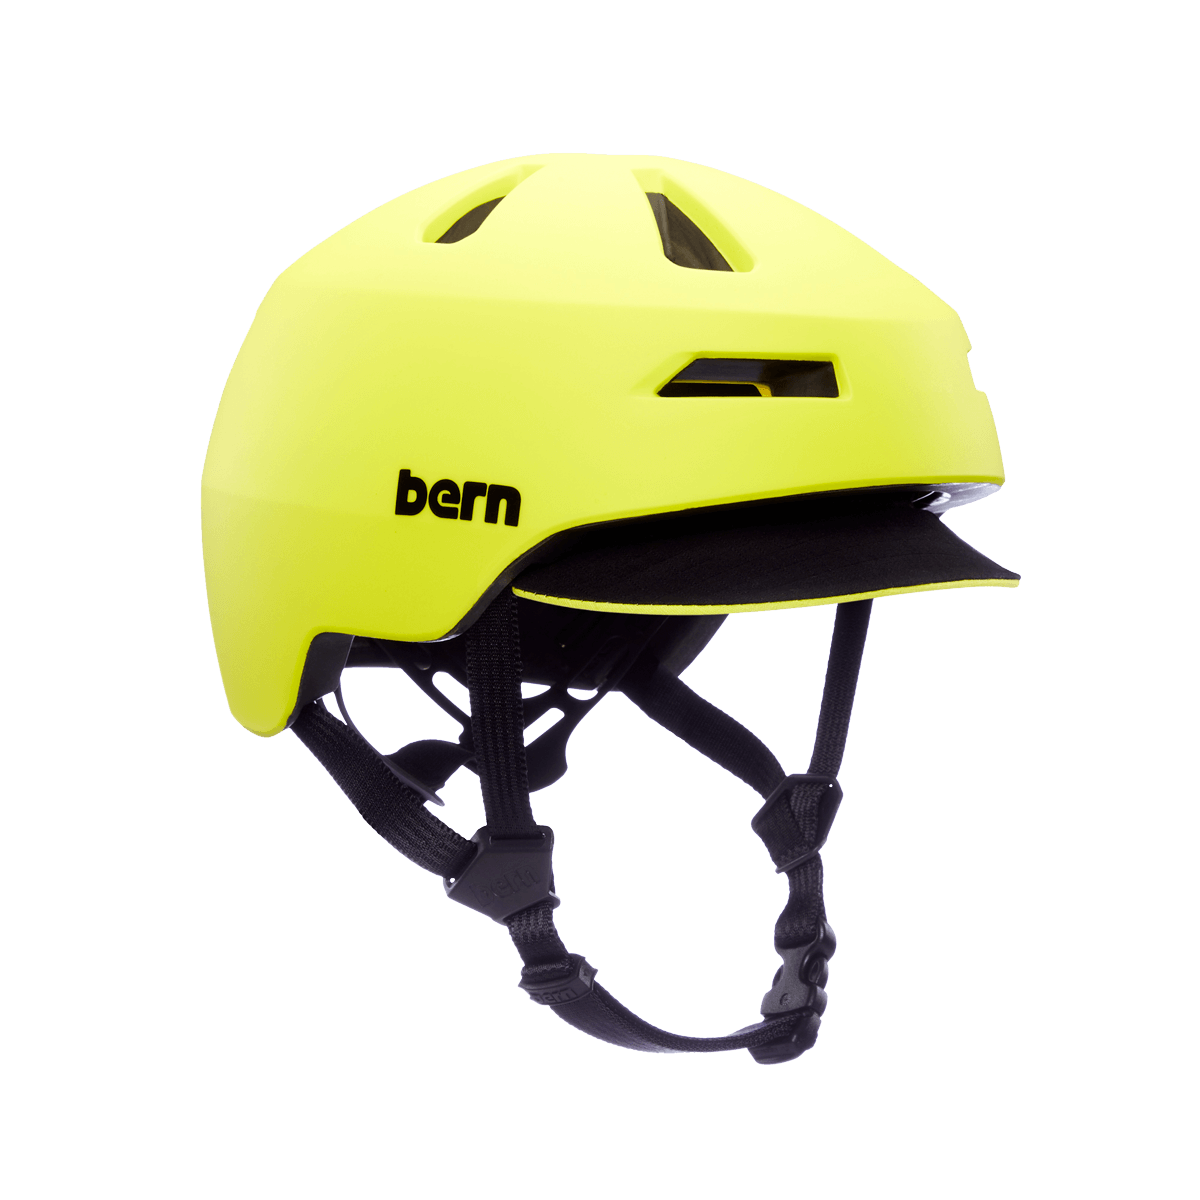 Nino 2.0 MIPS Bike Helmet (Barn Deal)